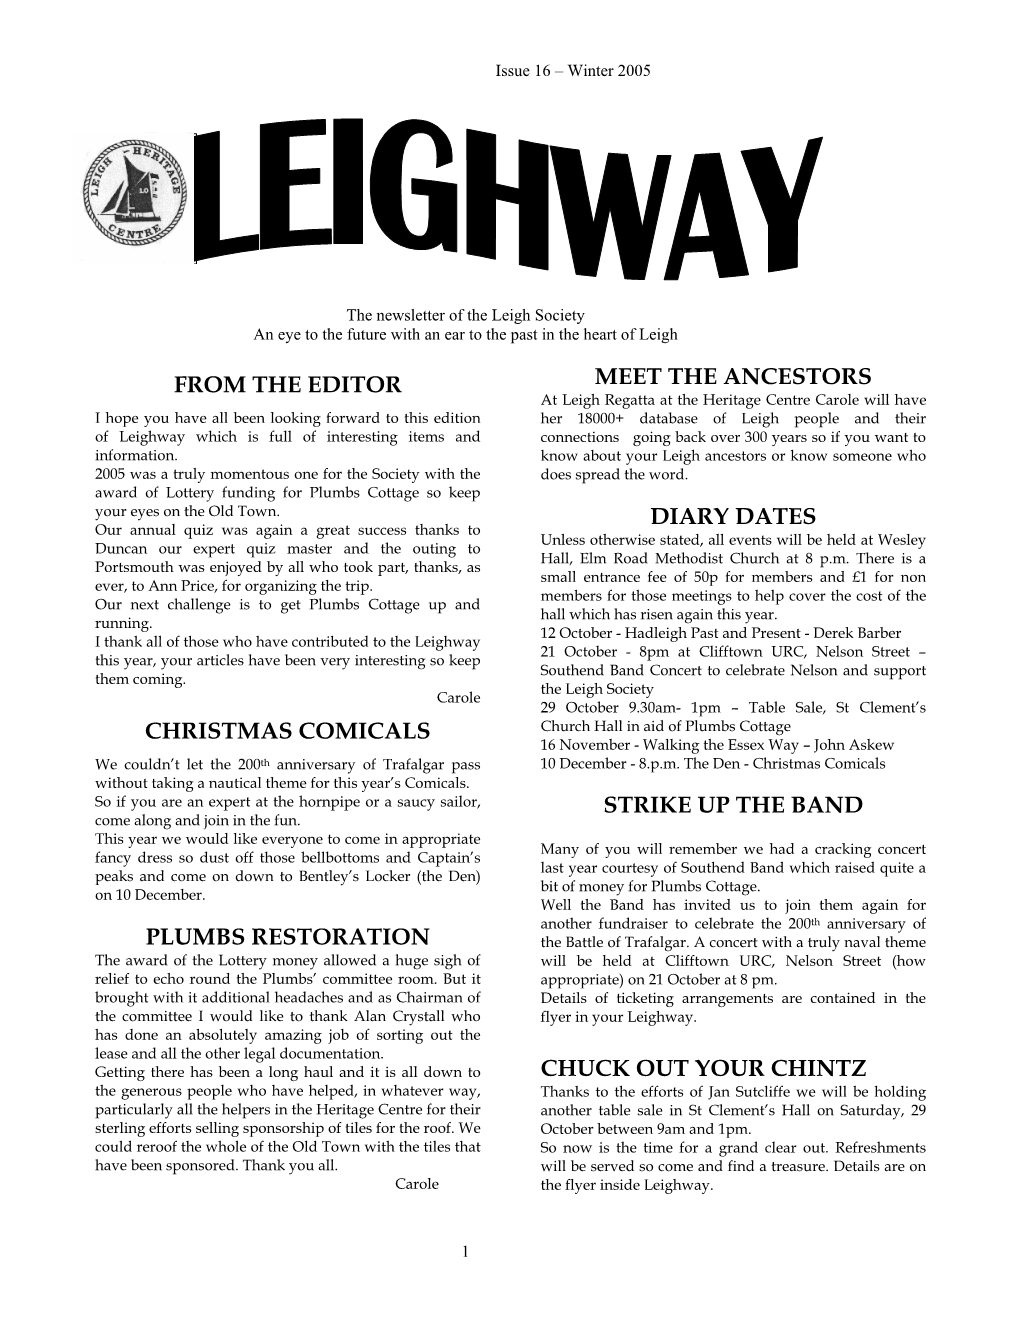 Leighway Winter 2005.Pdf